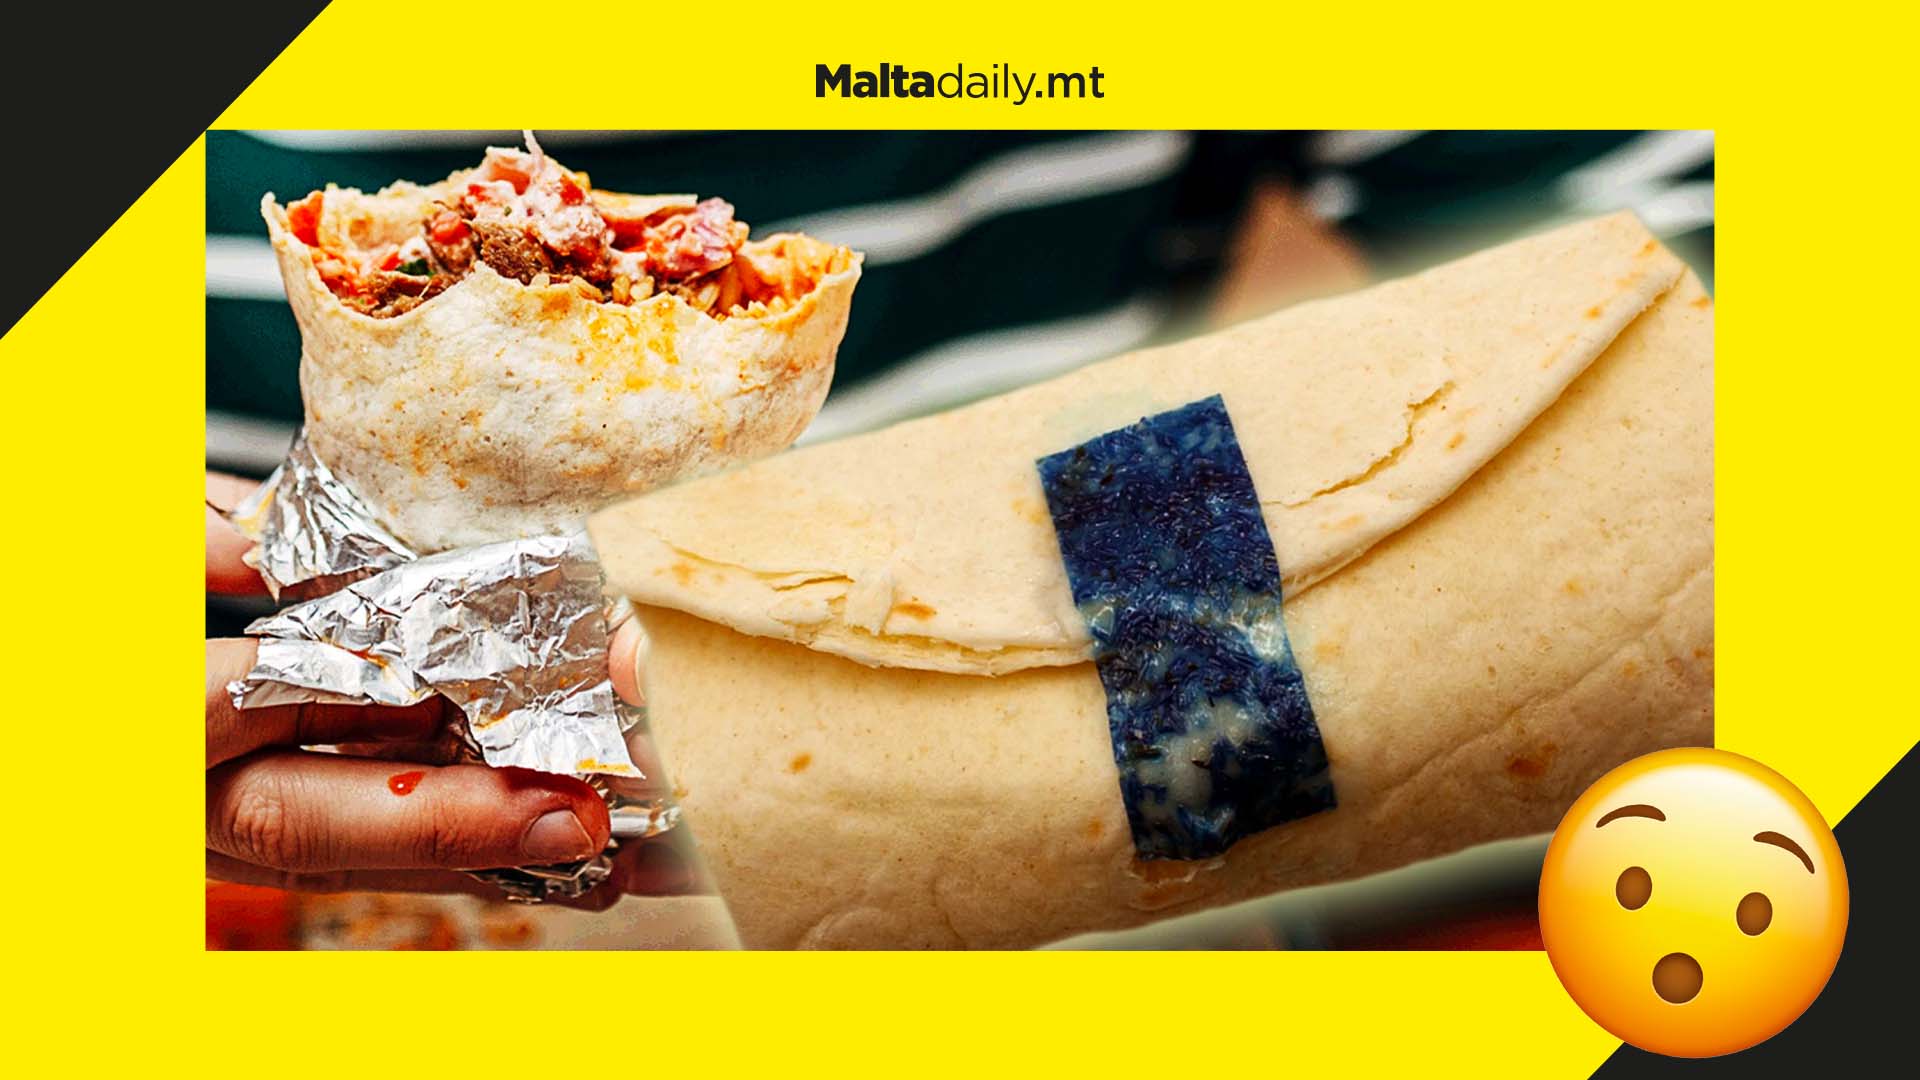 Students create edible tape to make eating burritos easier